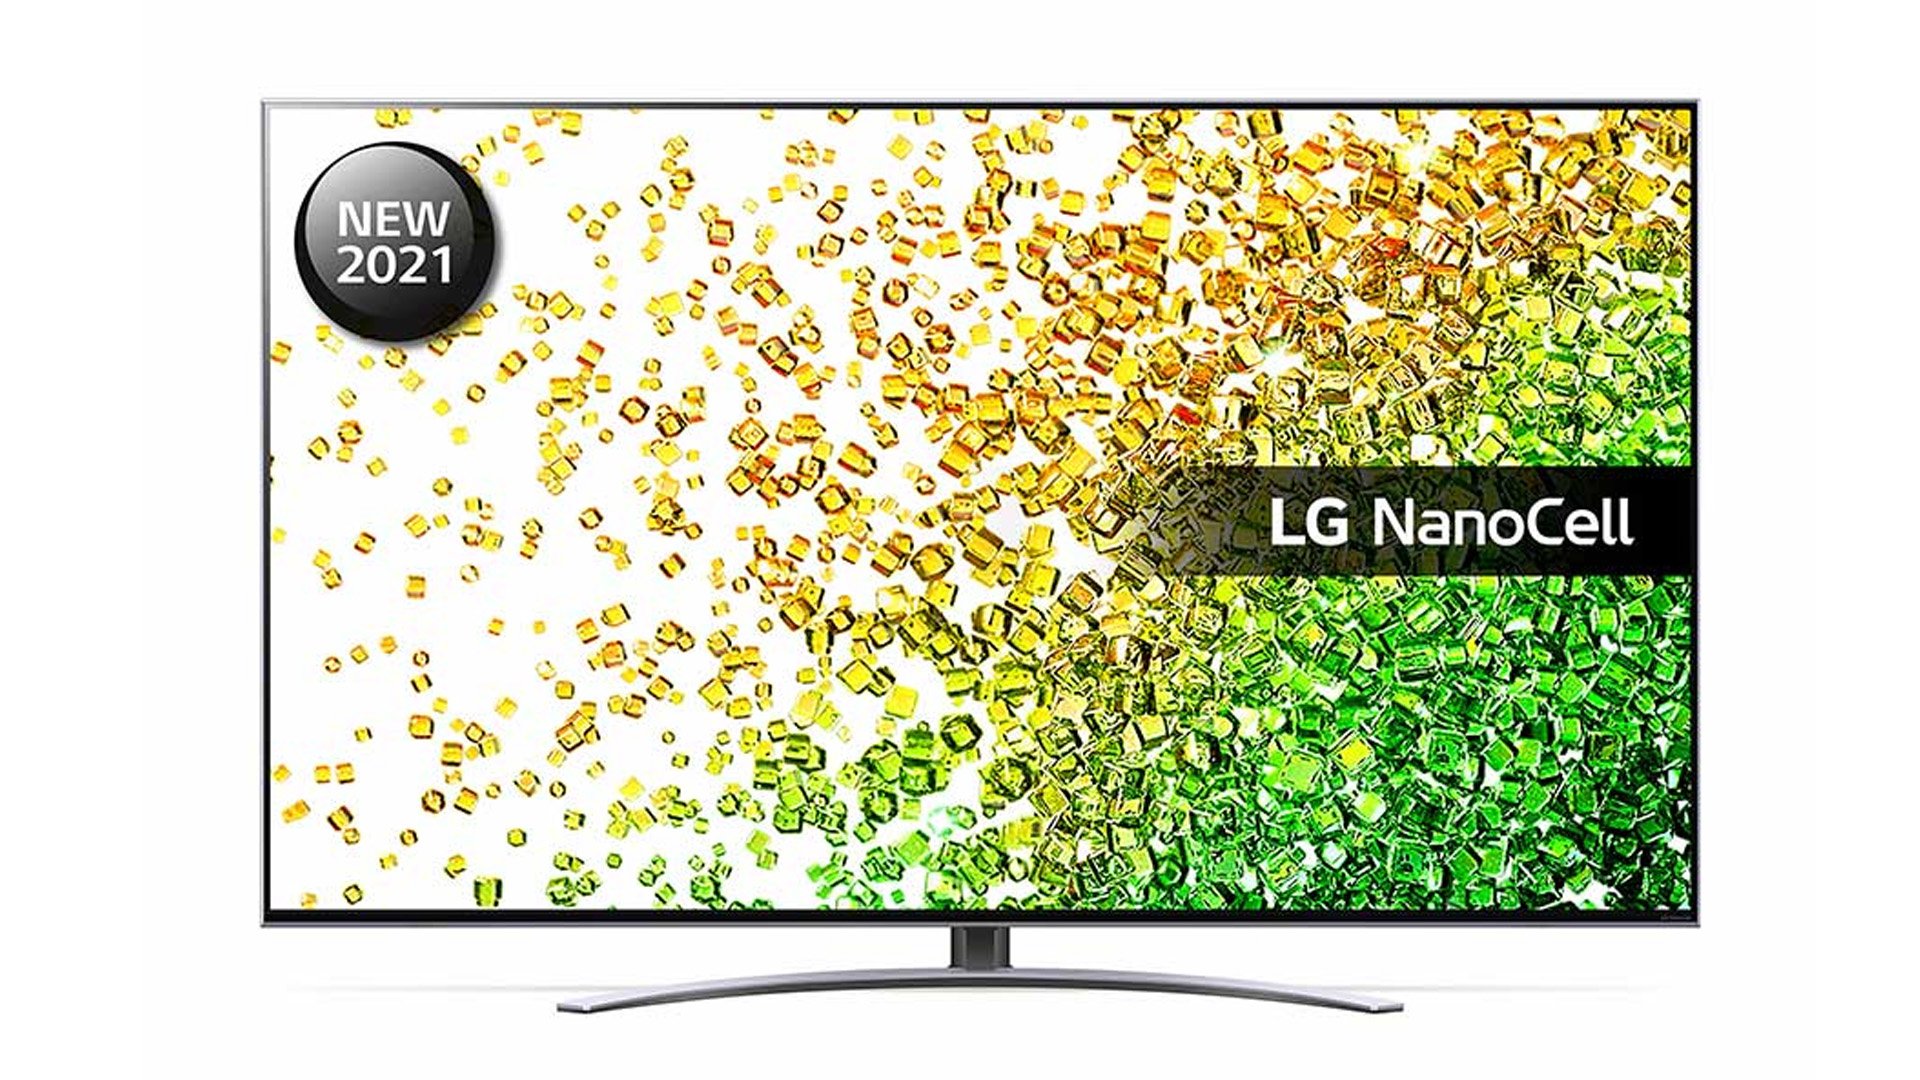 TV LG NanoCell